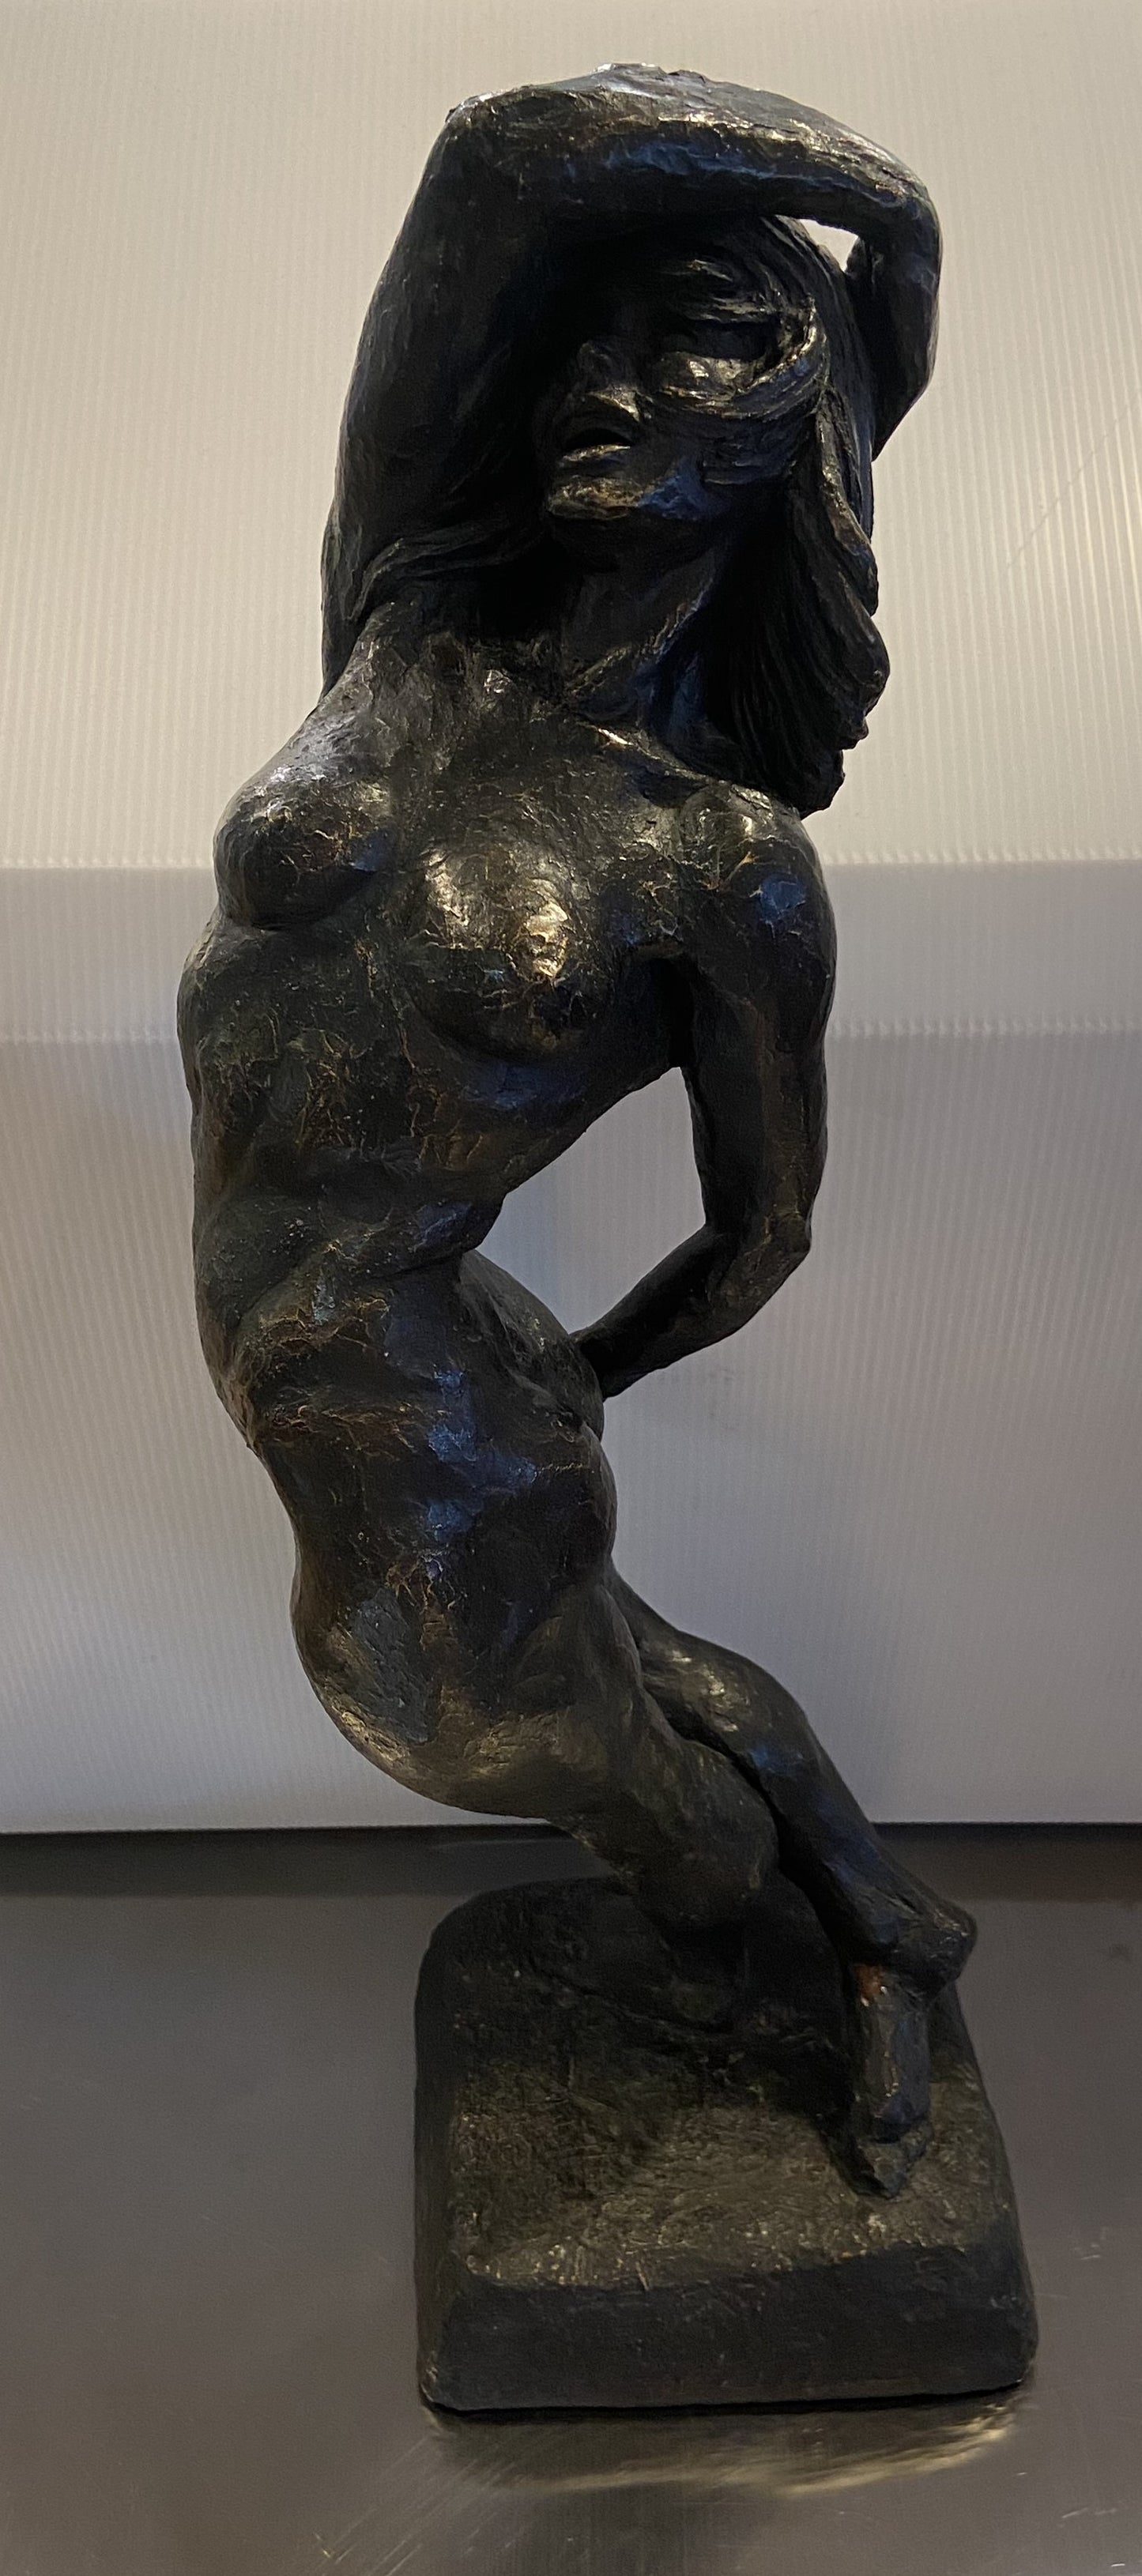 Thomas Holland Nude Figure of a Woman (26671)